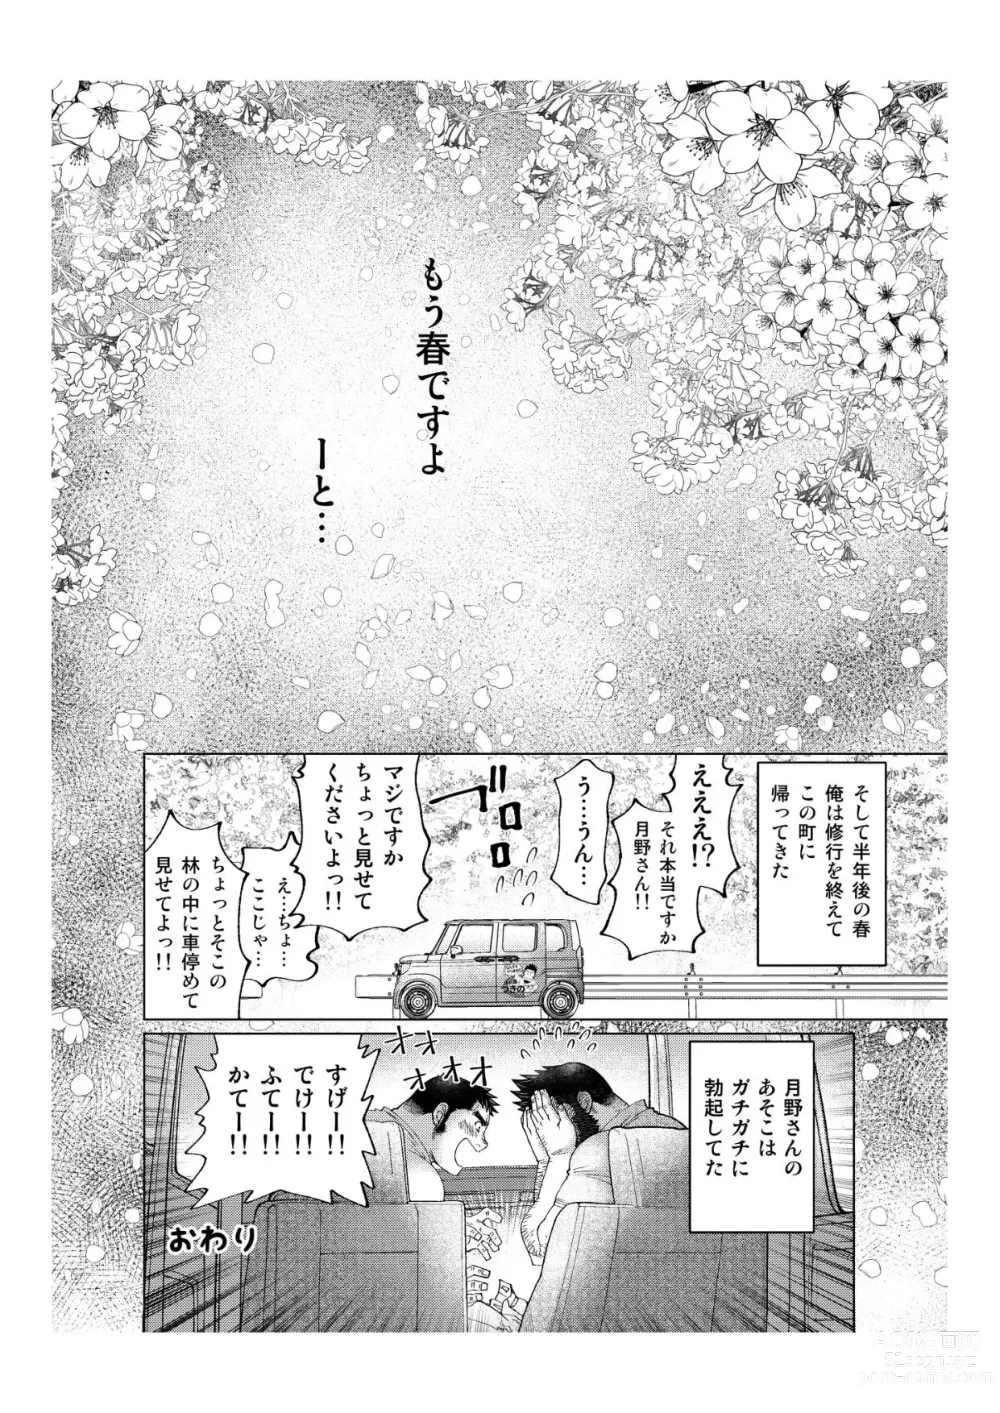 Page 61 of doujinshi Tsukinowaguma